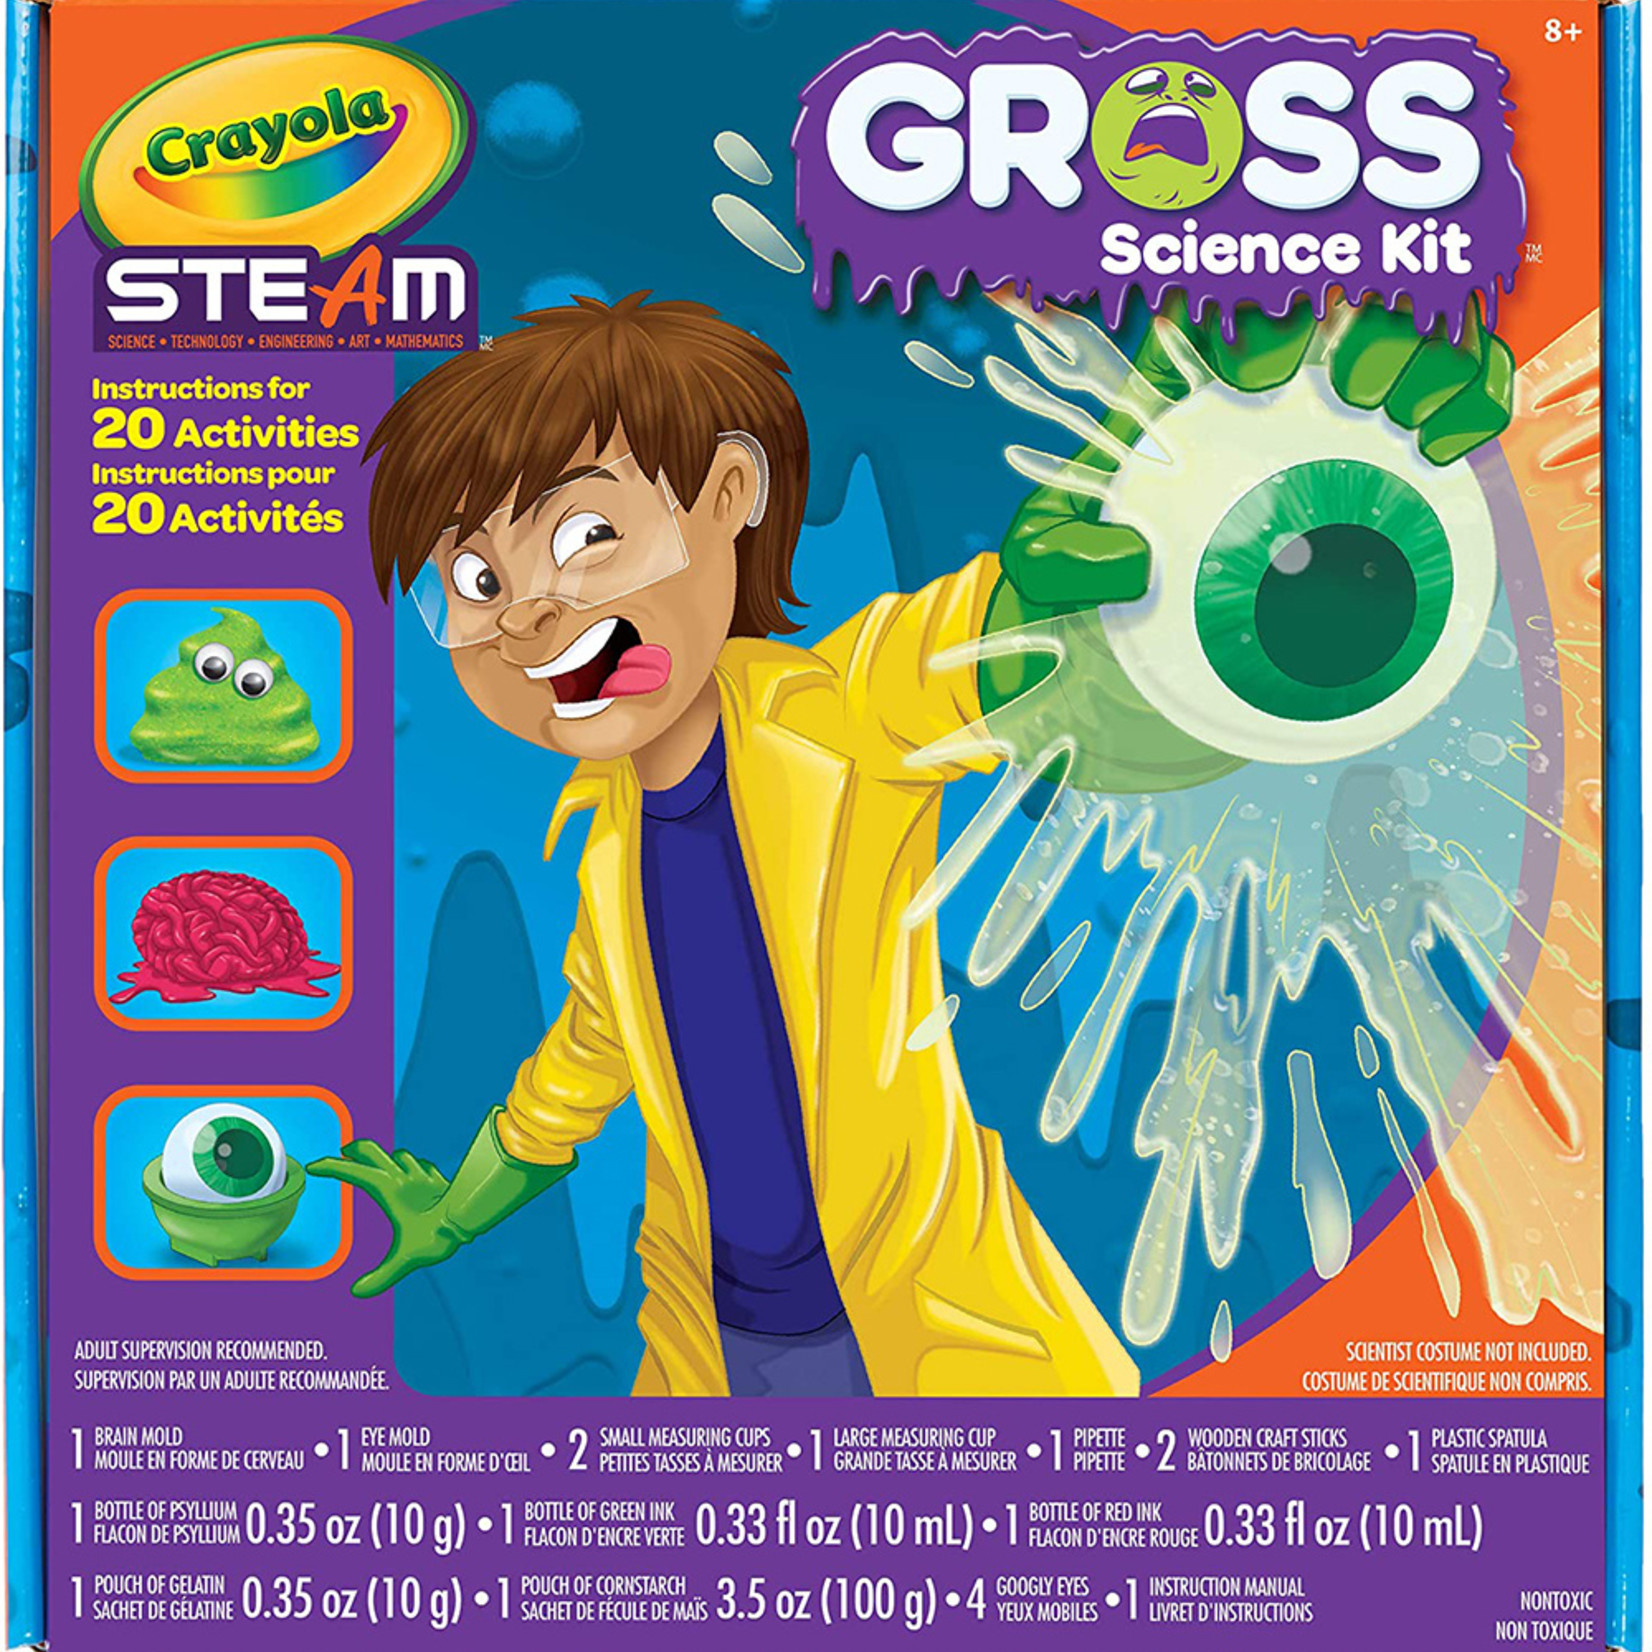 Crayola Crayola - Gross Science Kit